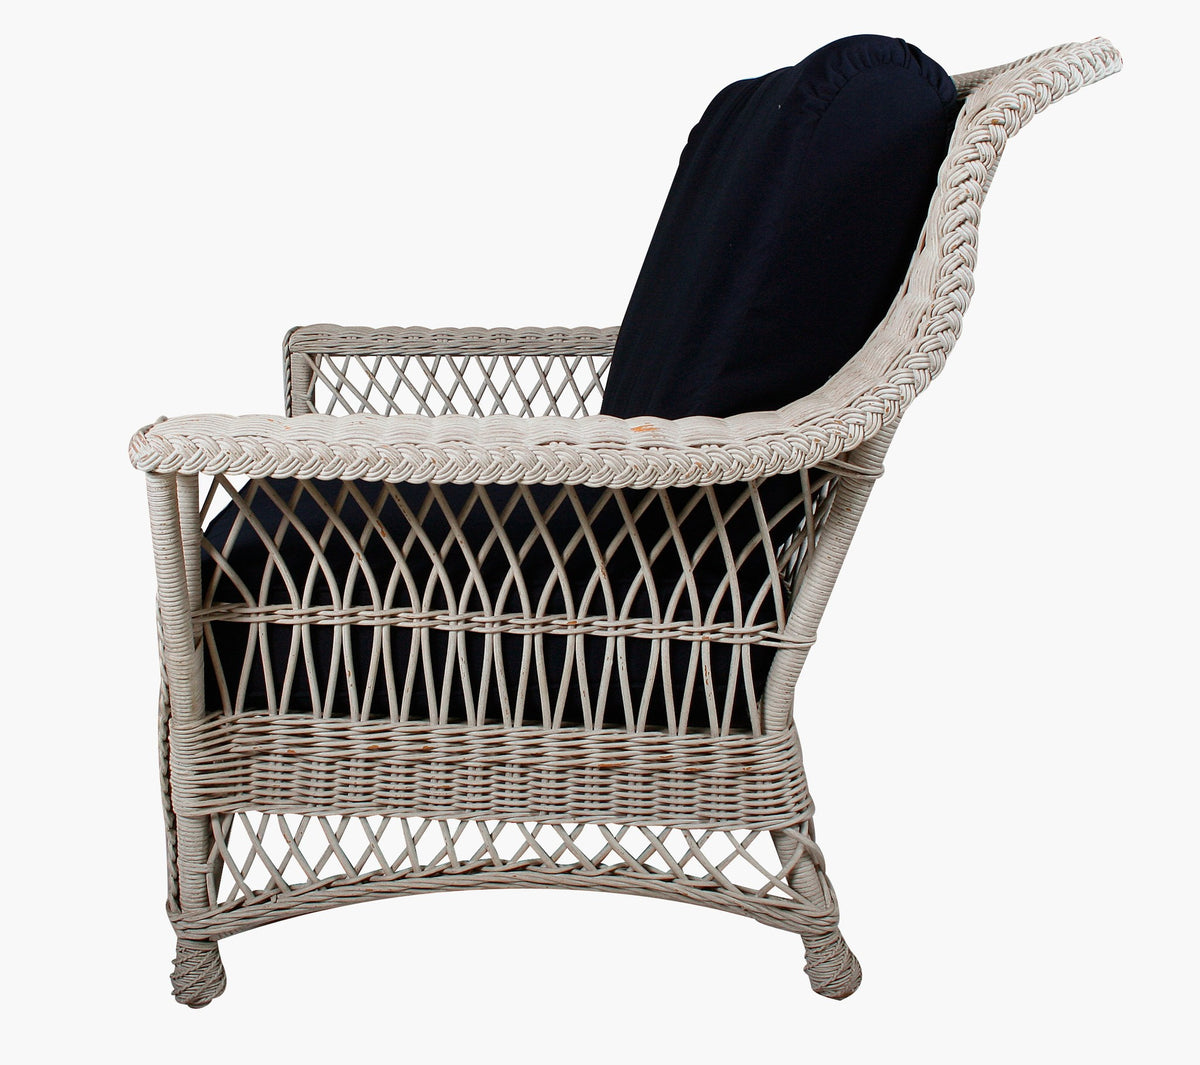 Designer Wicker &amp; Rattan By Tribor Rockport Chair and a Half by Designer Wicker from Tribor Chair - Rattan Imports